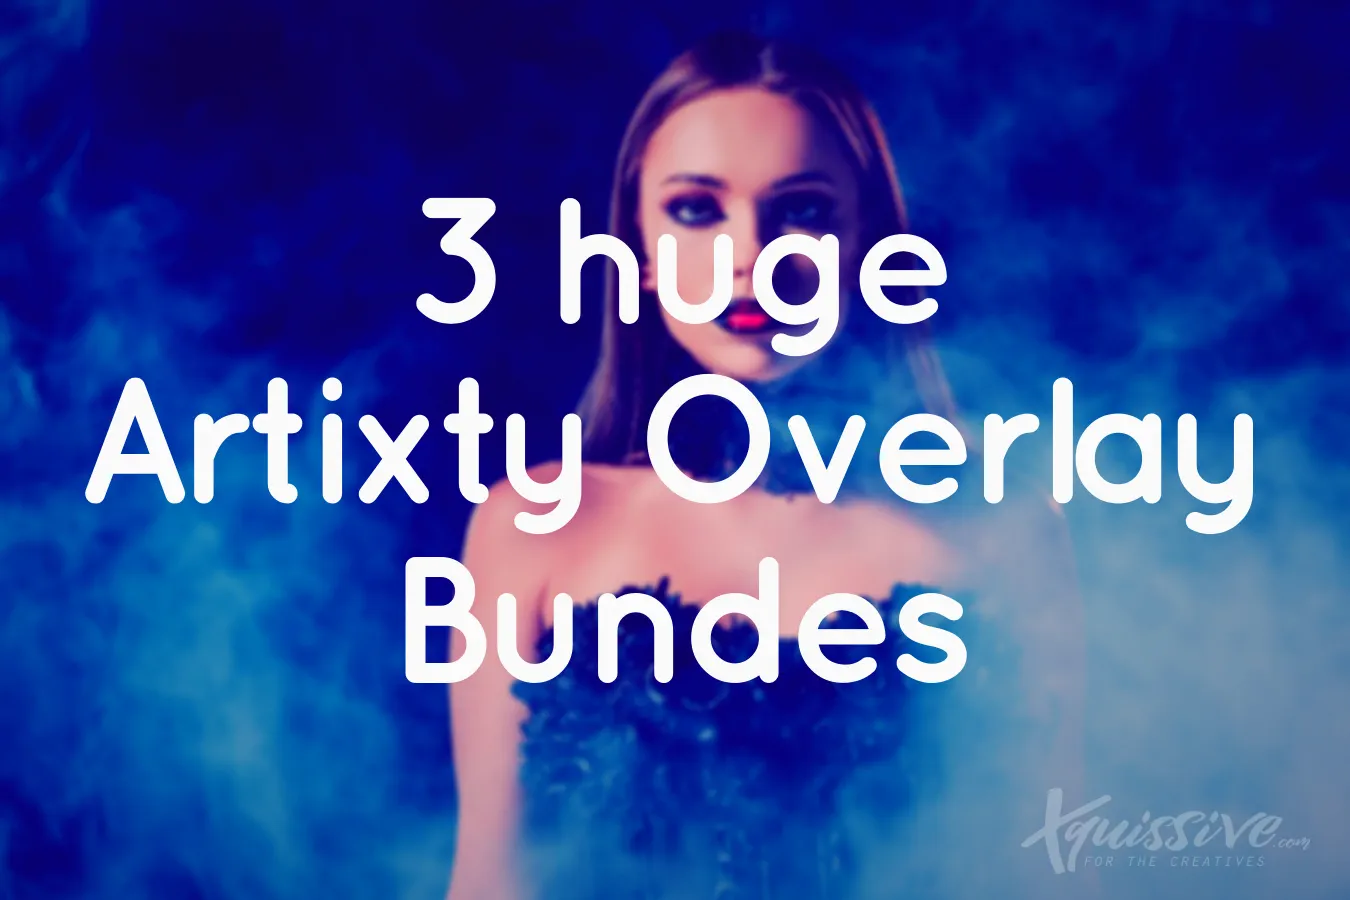 3 Overlay Bundles from Artixty